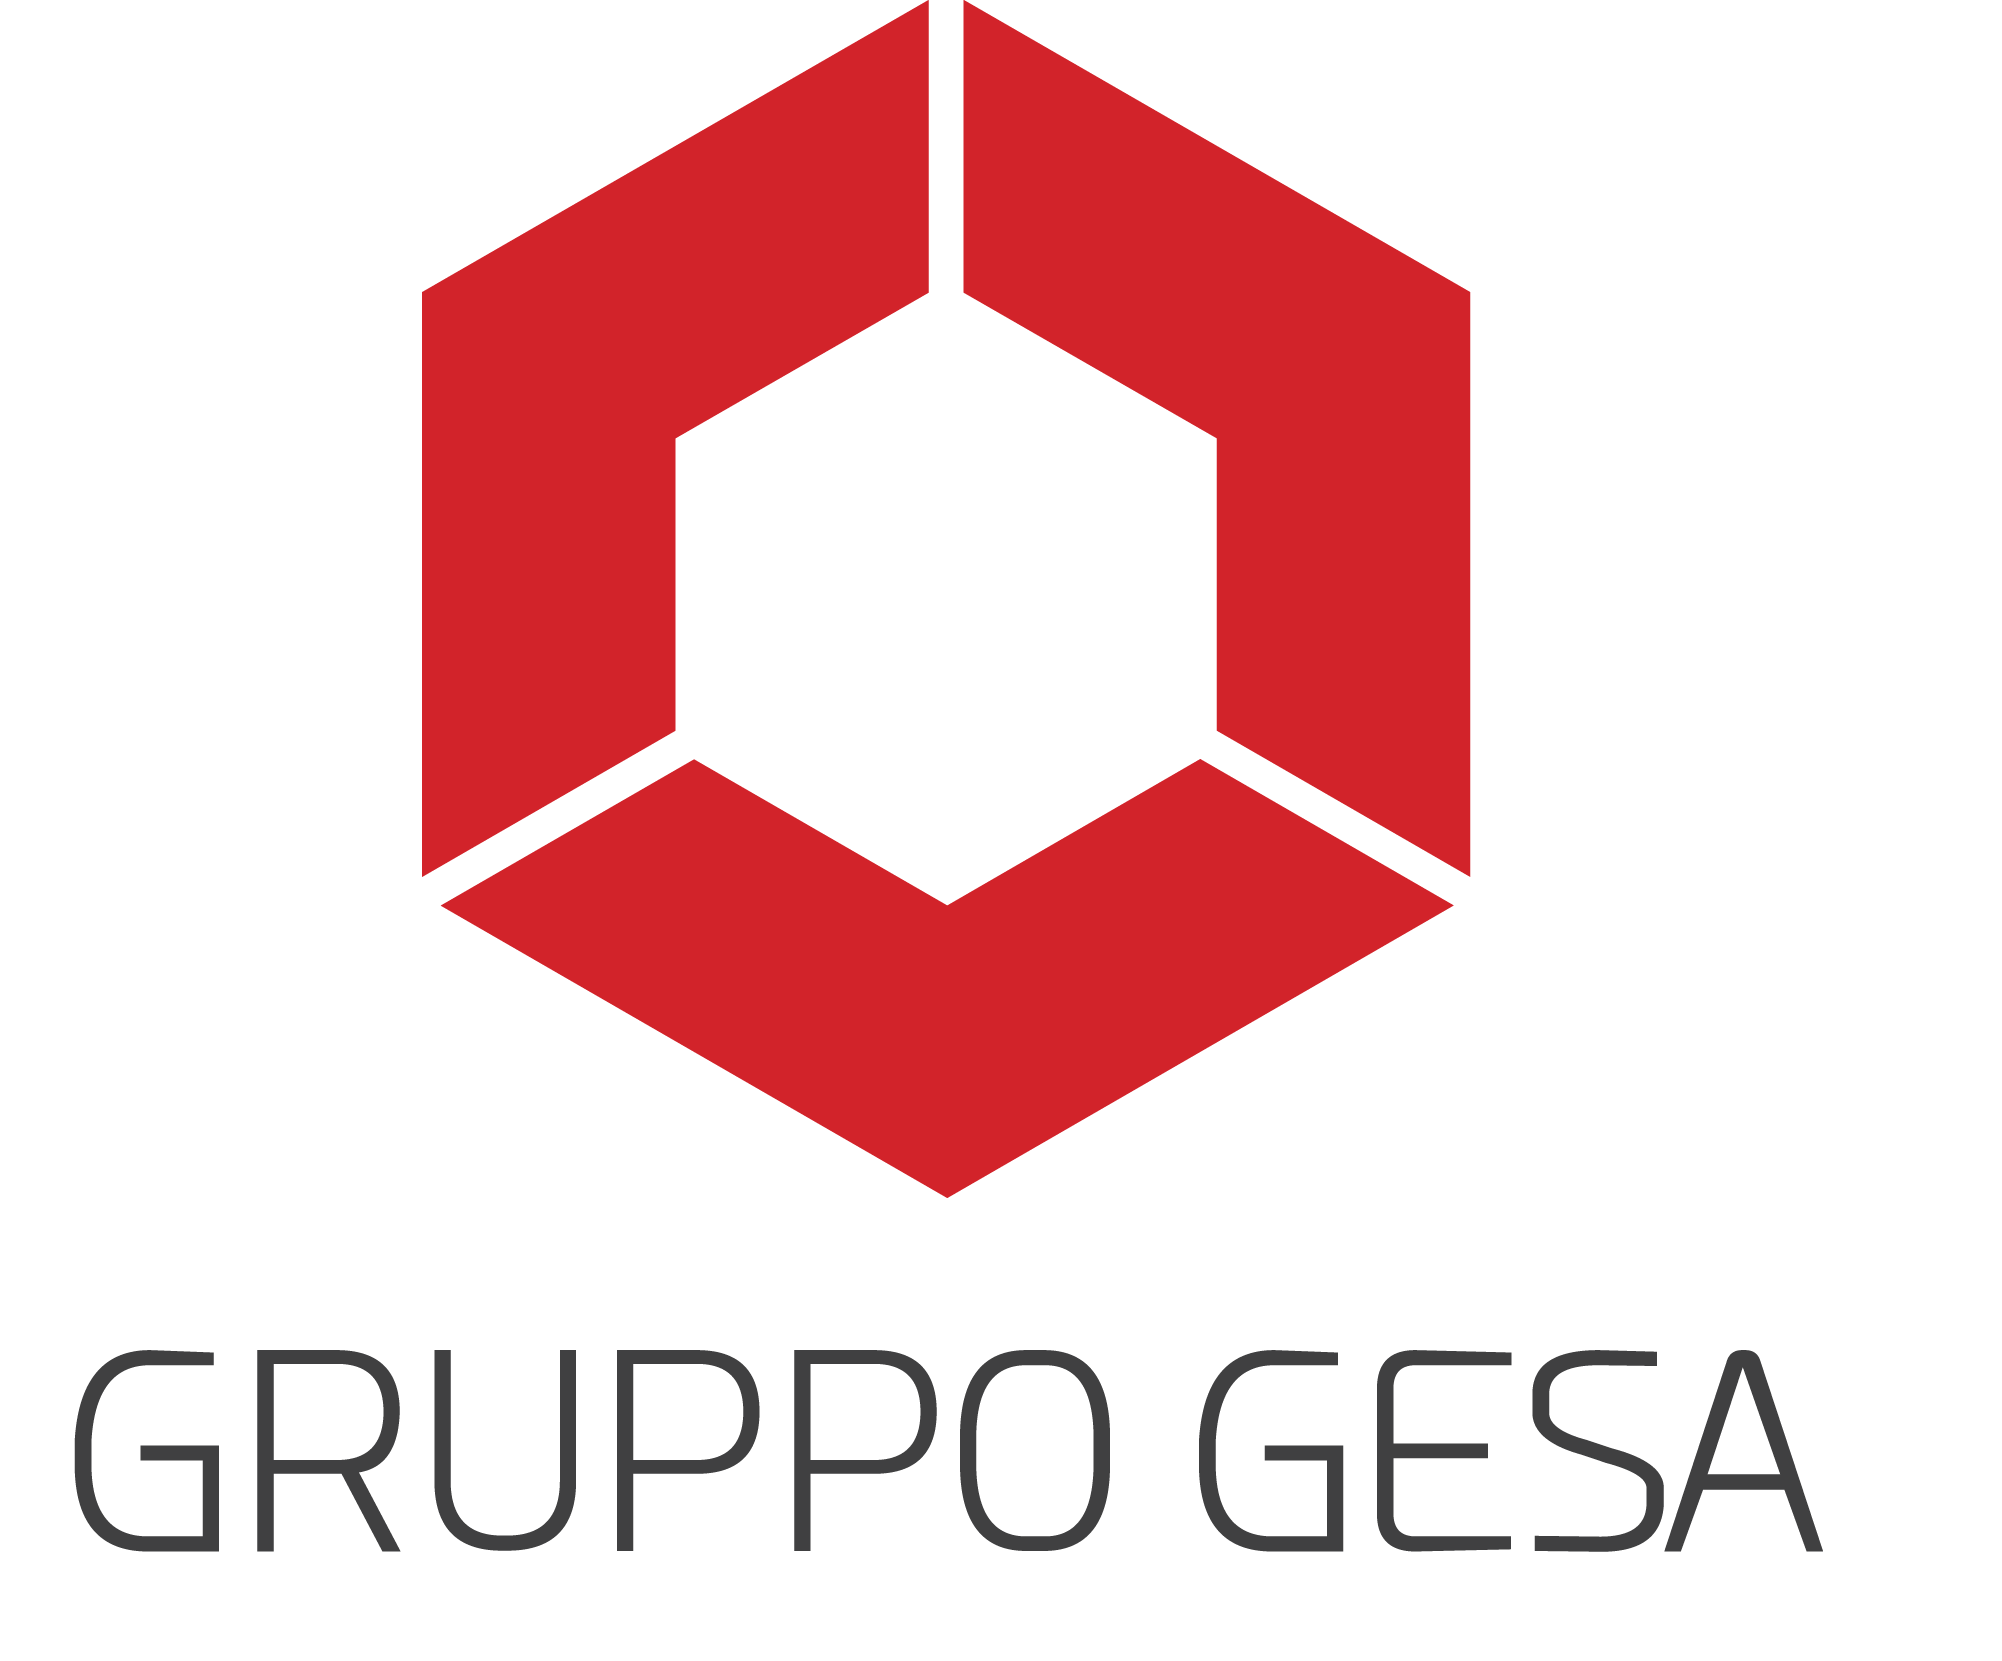 THE GESA GROUP